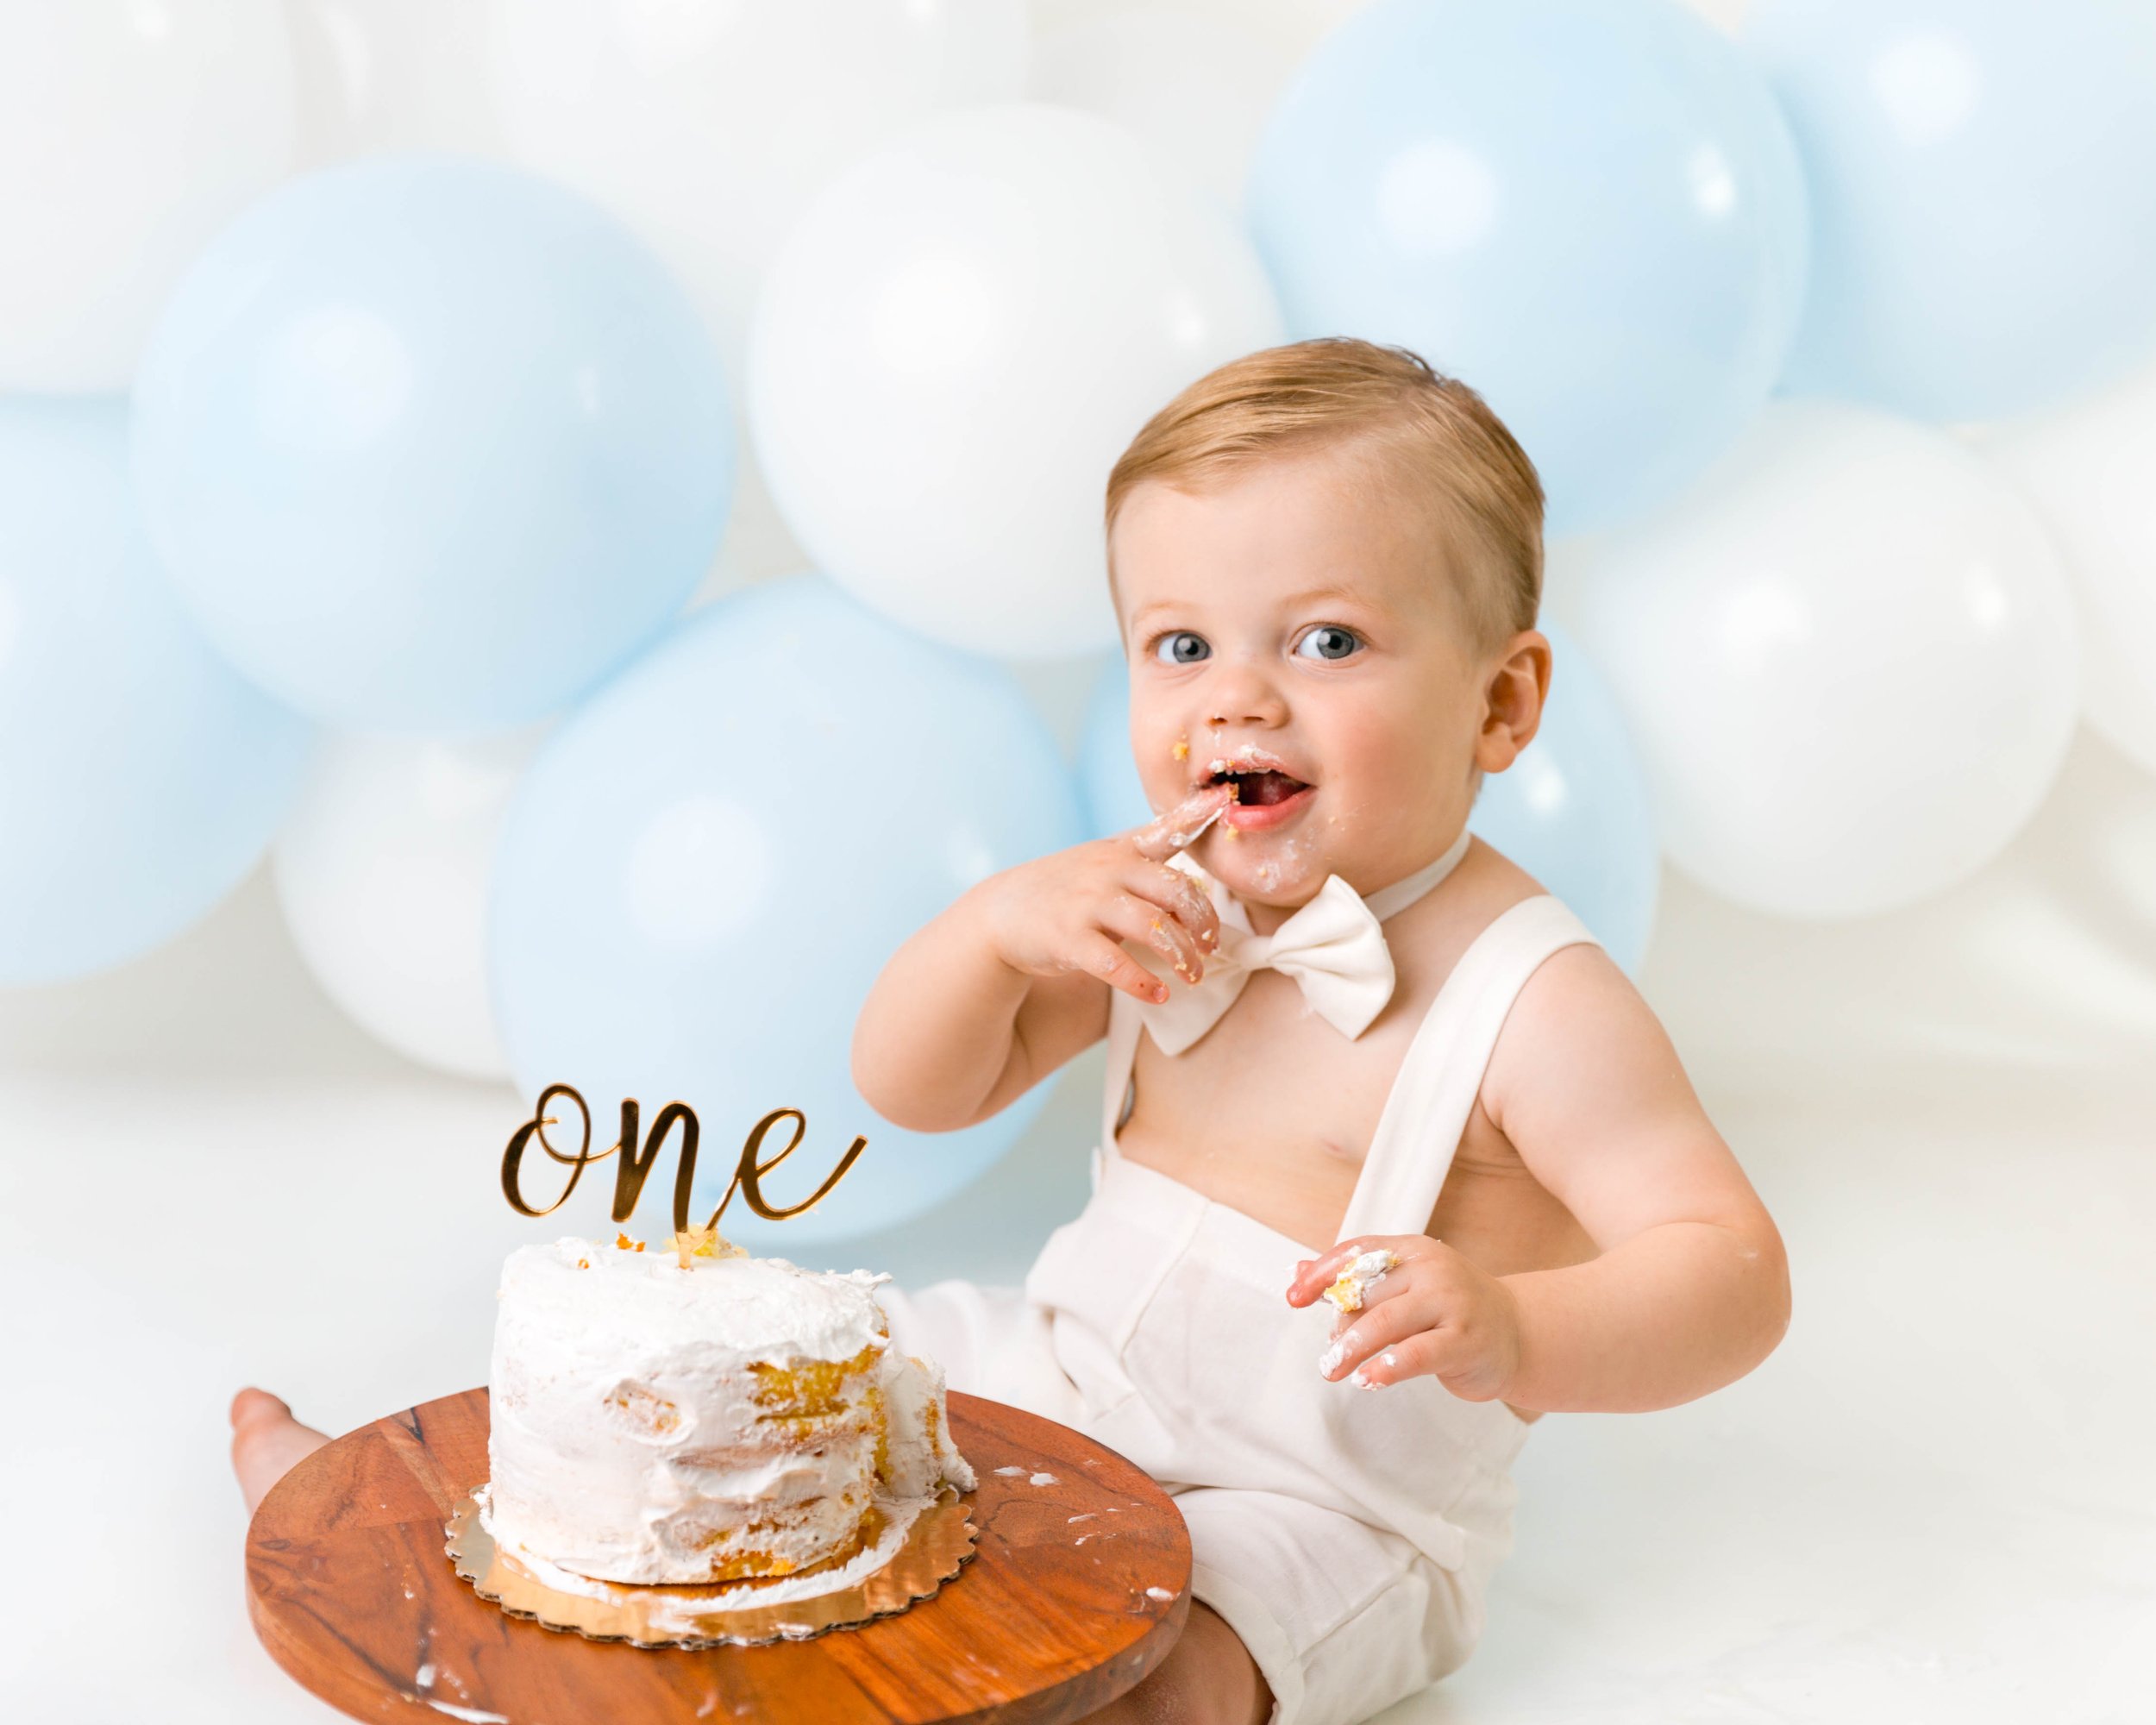 cake-smash-photos-first-birthday-images-milestone-photography-newborn-family-spokane-washington-6.jpg